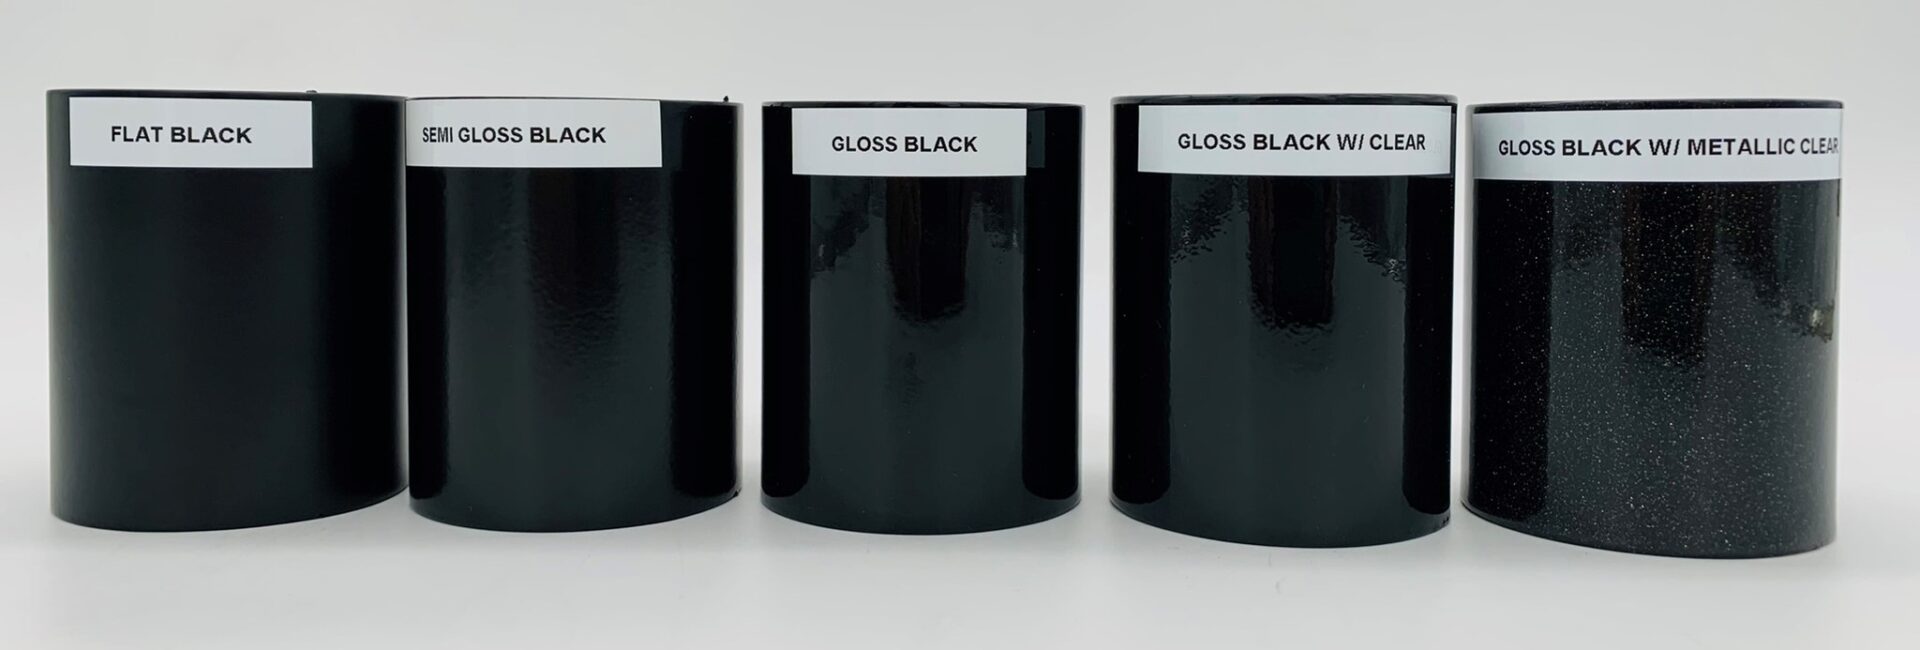 Three flat black, semi gloss, and gloss black